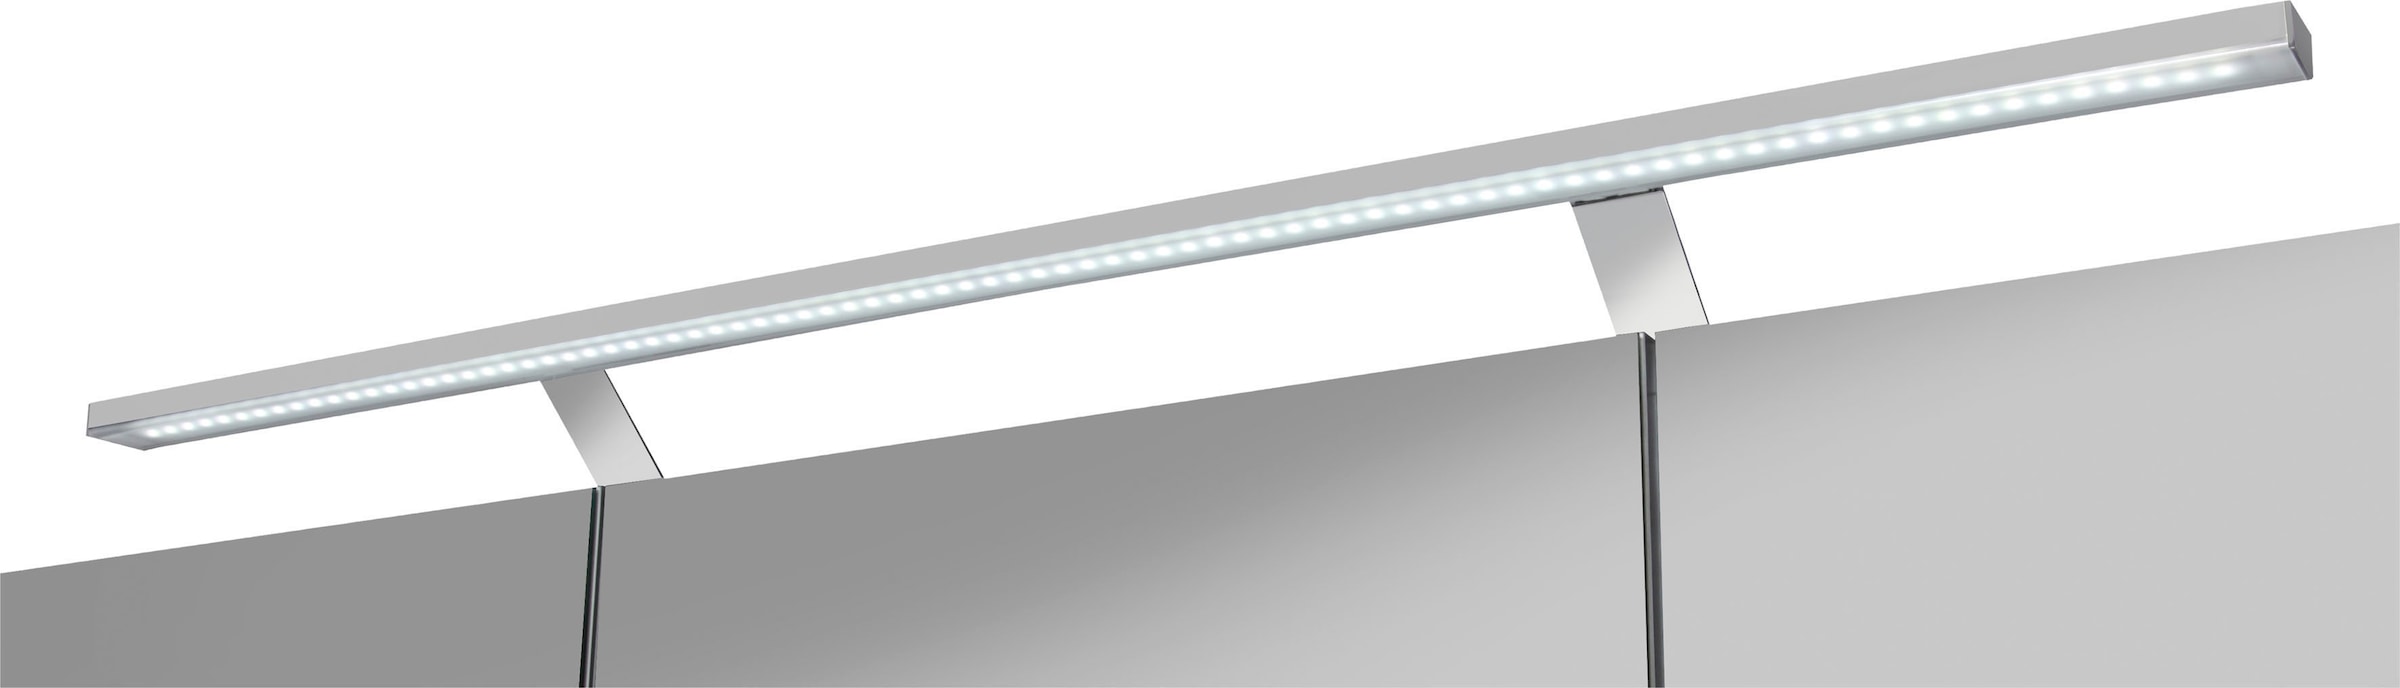 welltime Spiegelschrank »Torino«, Breite 120 cm, 3-türig, LED-Beleuchtung,  Schalter-/Steckdosenbox bei OTTO